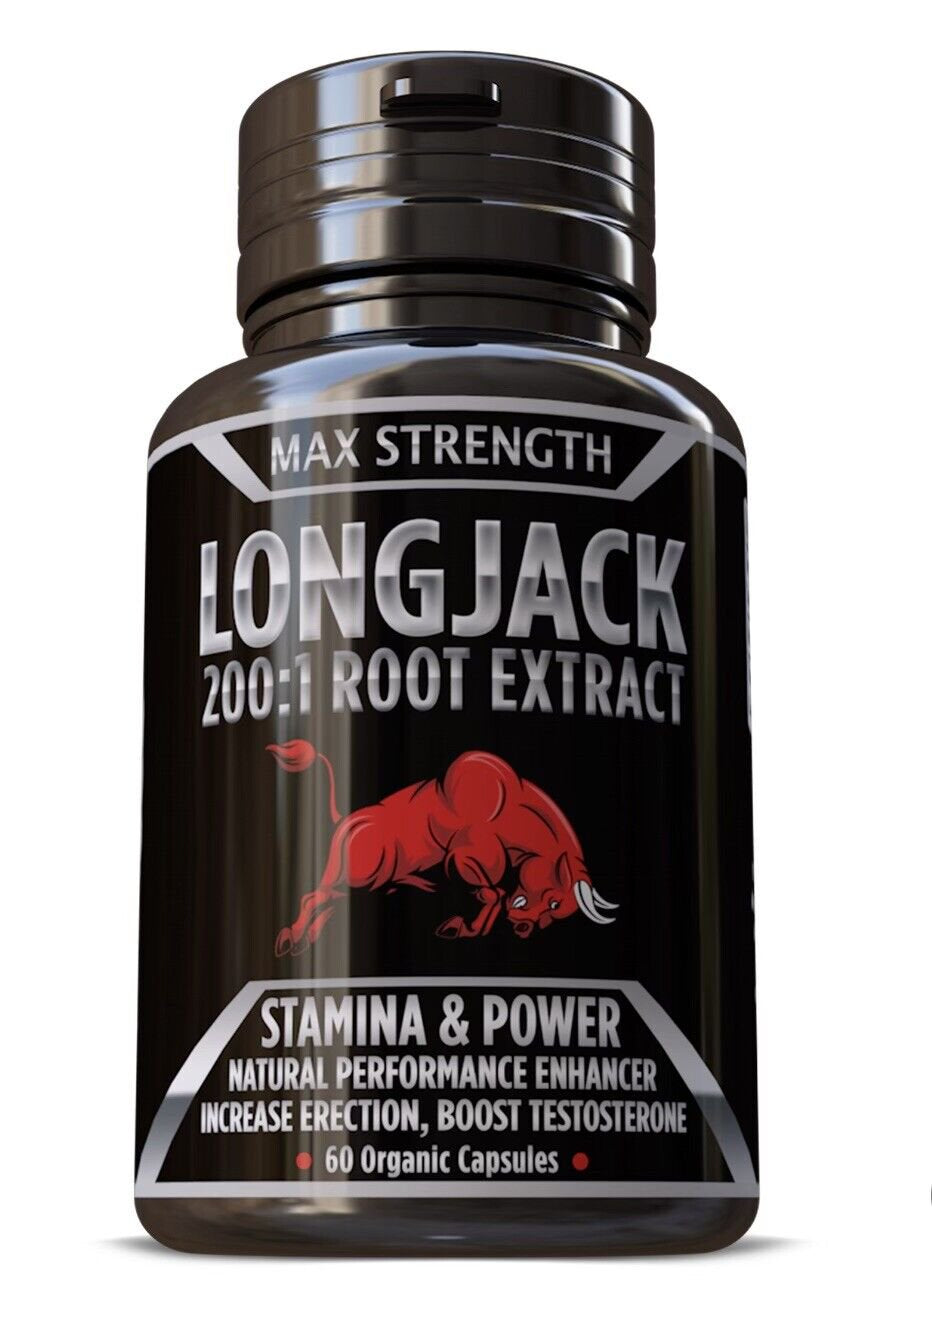 Max Strength Longjack 200:1 Root Extract Stamina & Powder for Men 60 Capsules